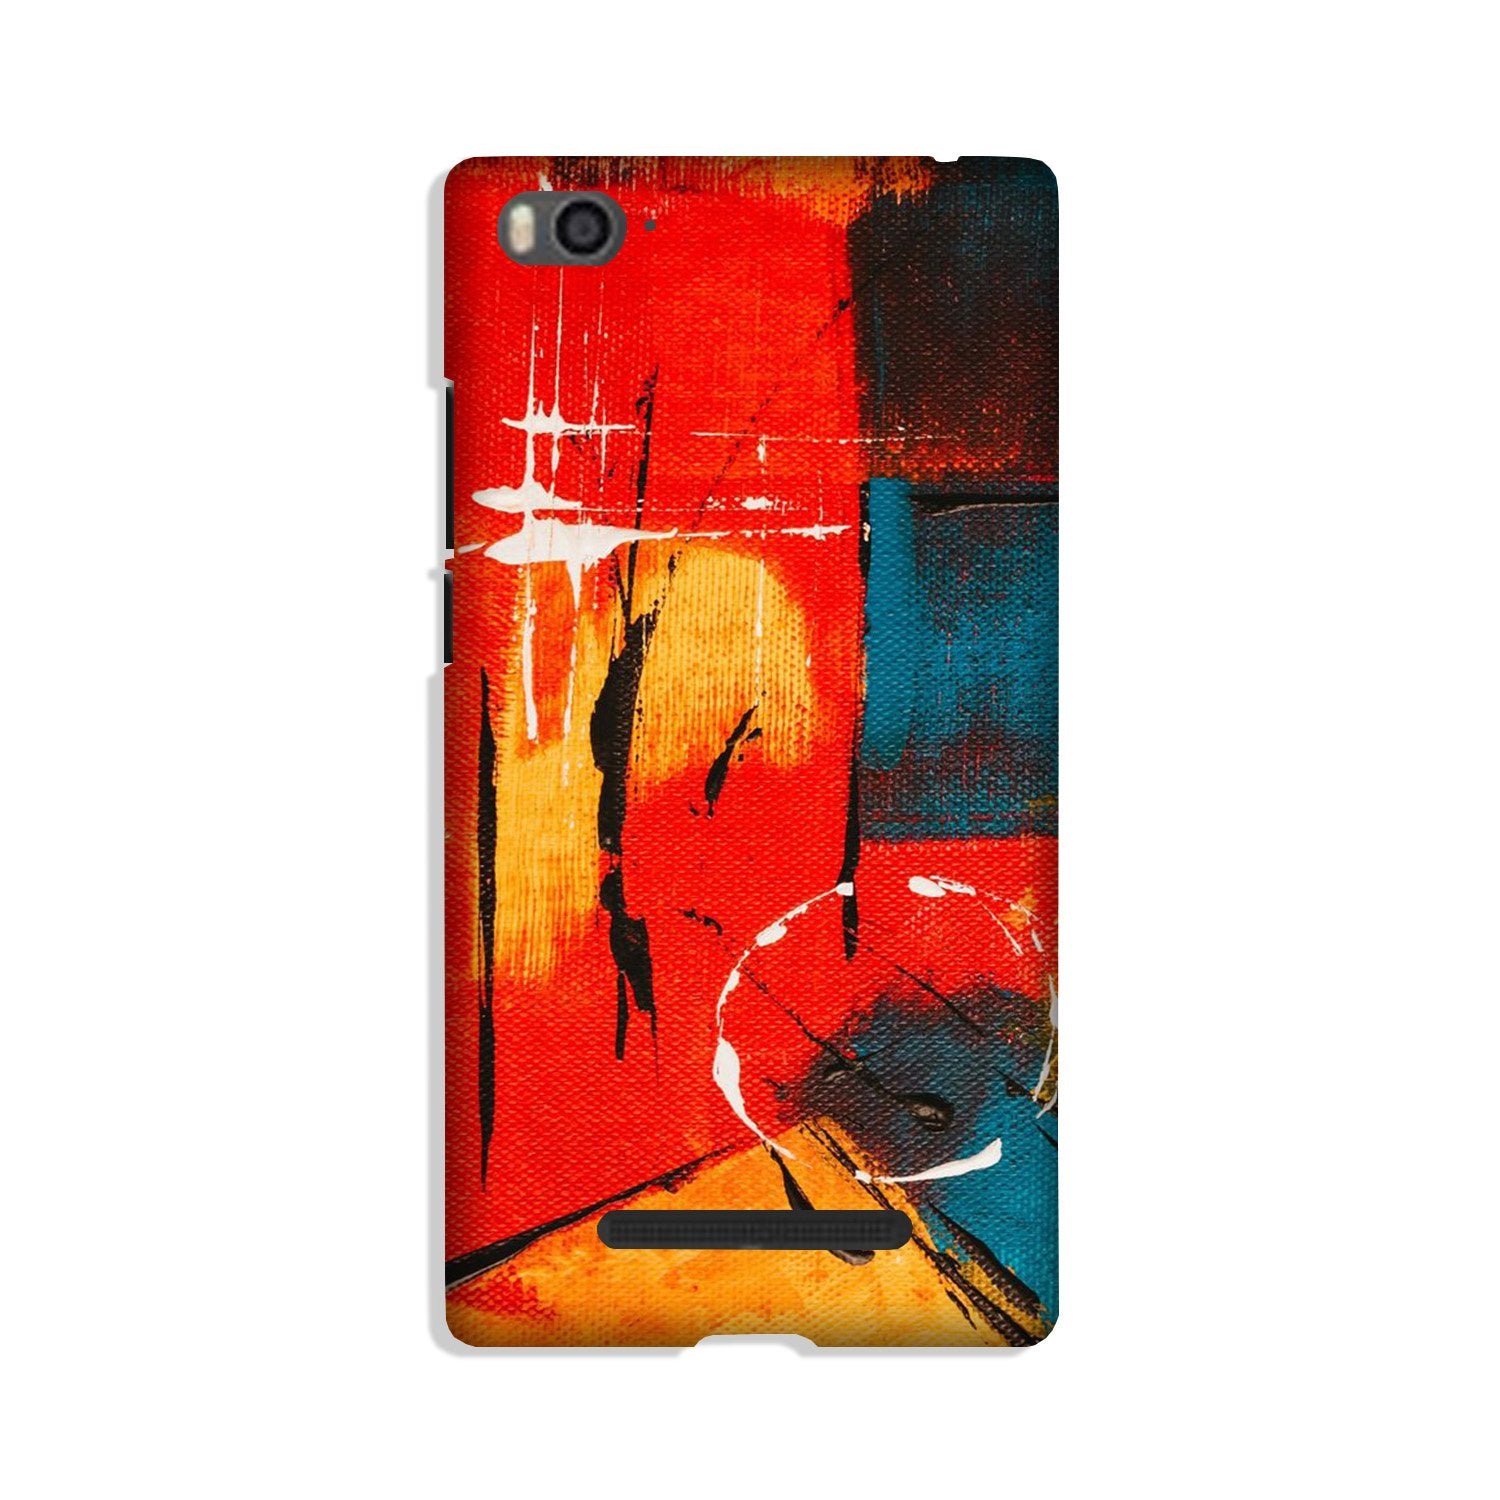 Modern Art Case for Xiaomi Mi 4i (Design No. 239)